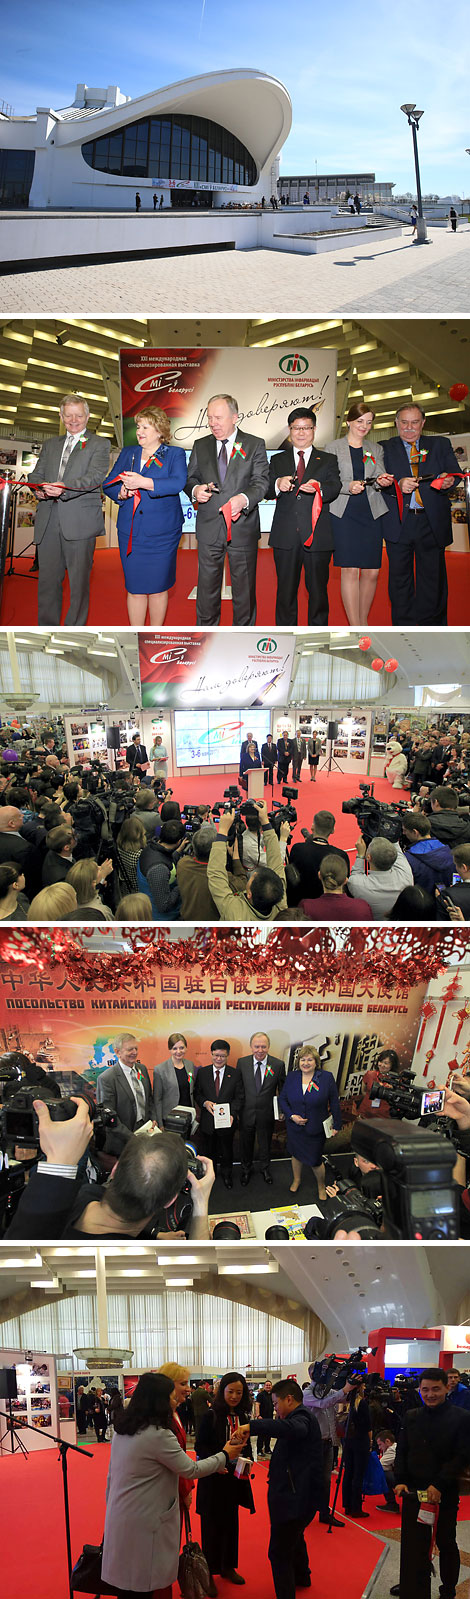 21st International Expo Mass Media in Belarus